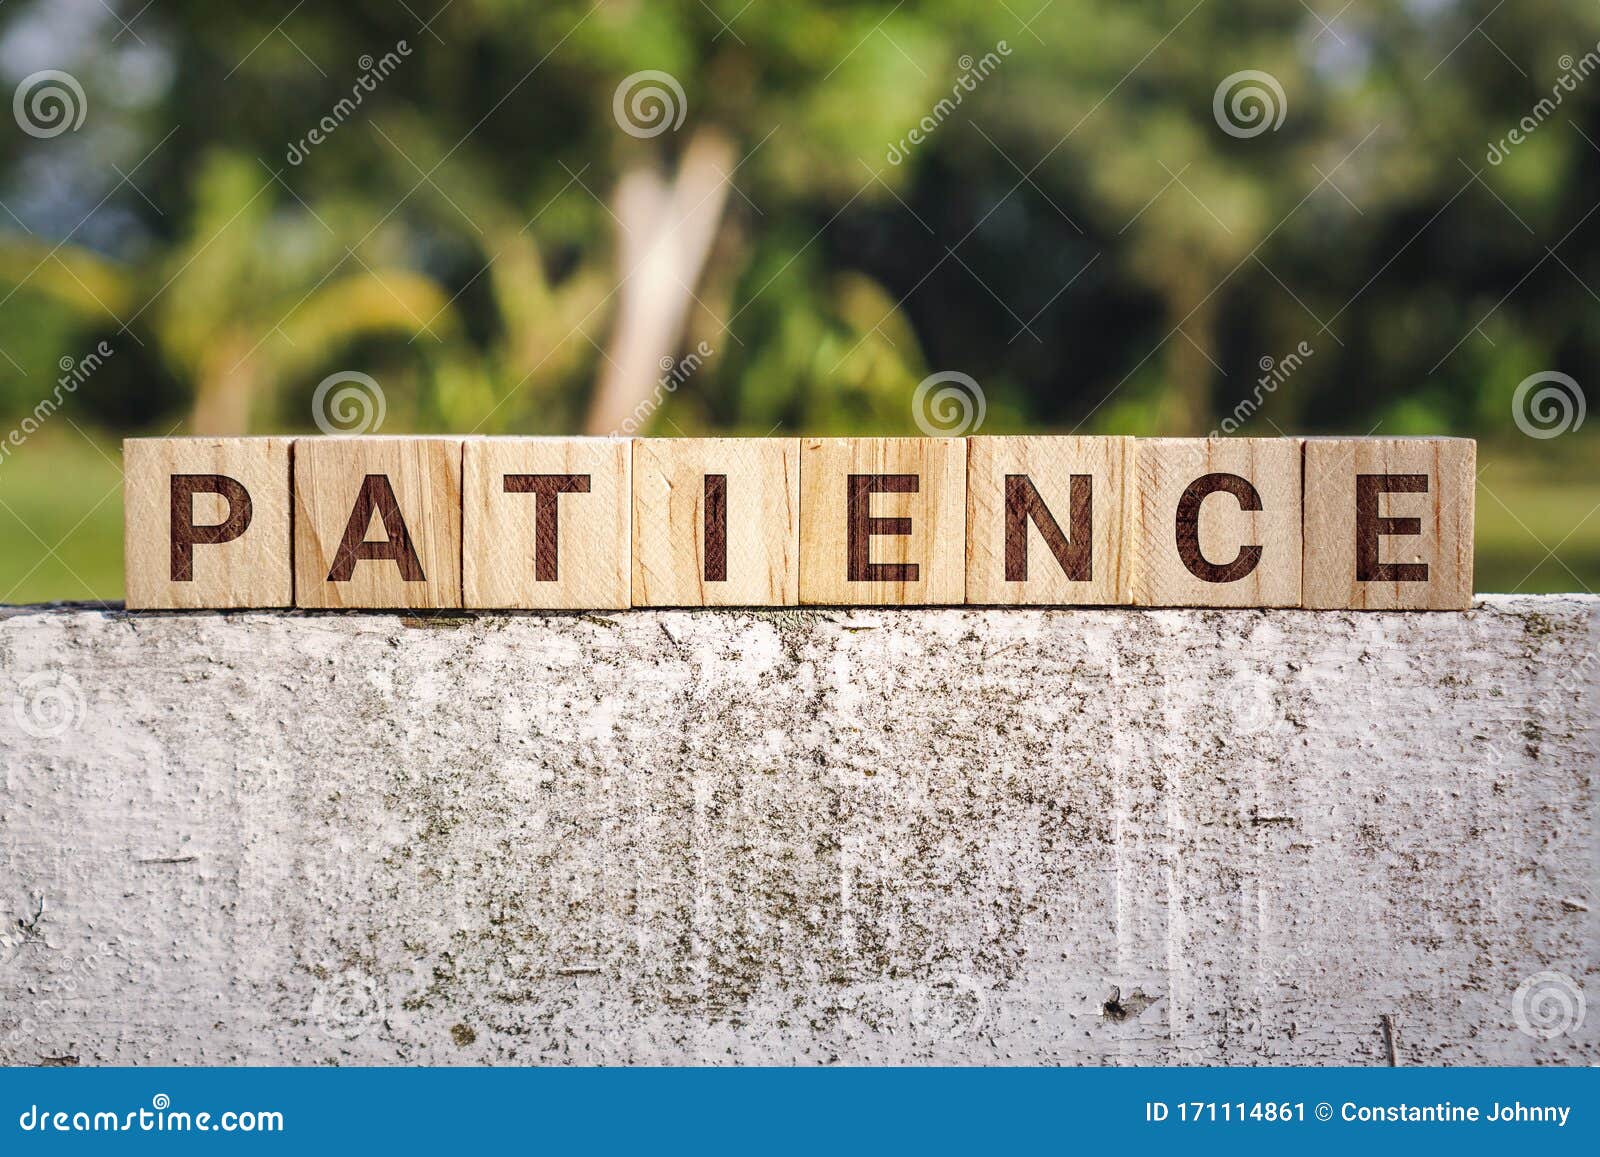 patience word on wooden block